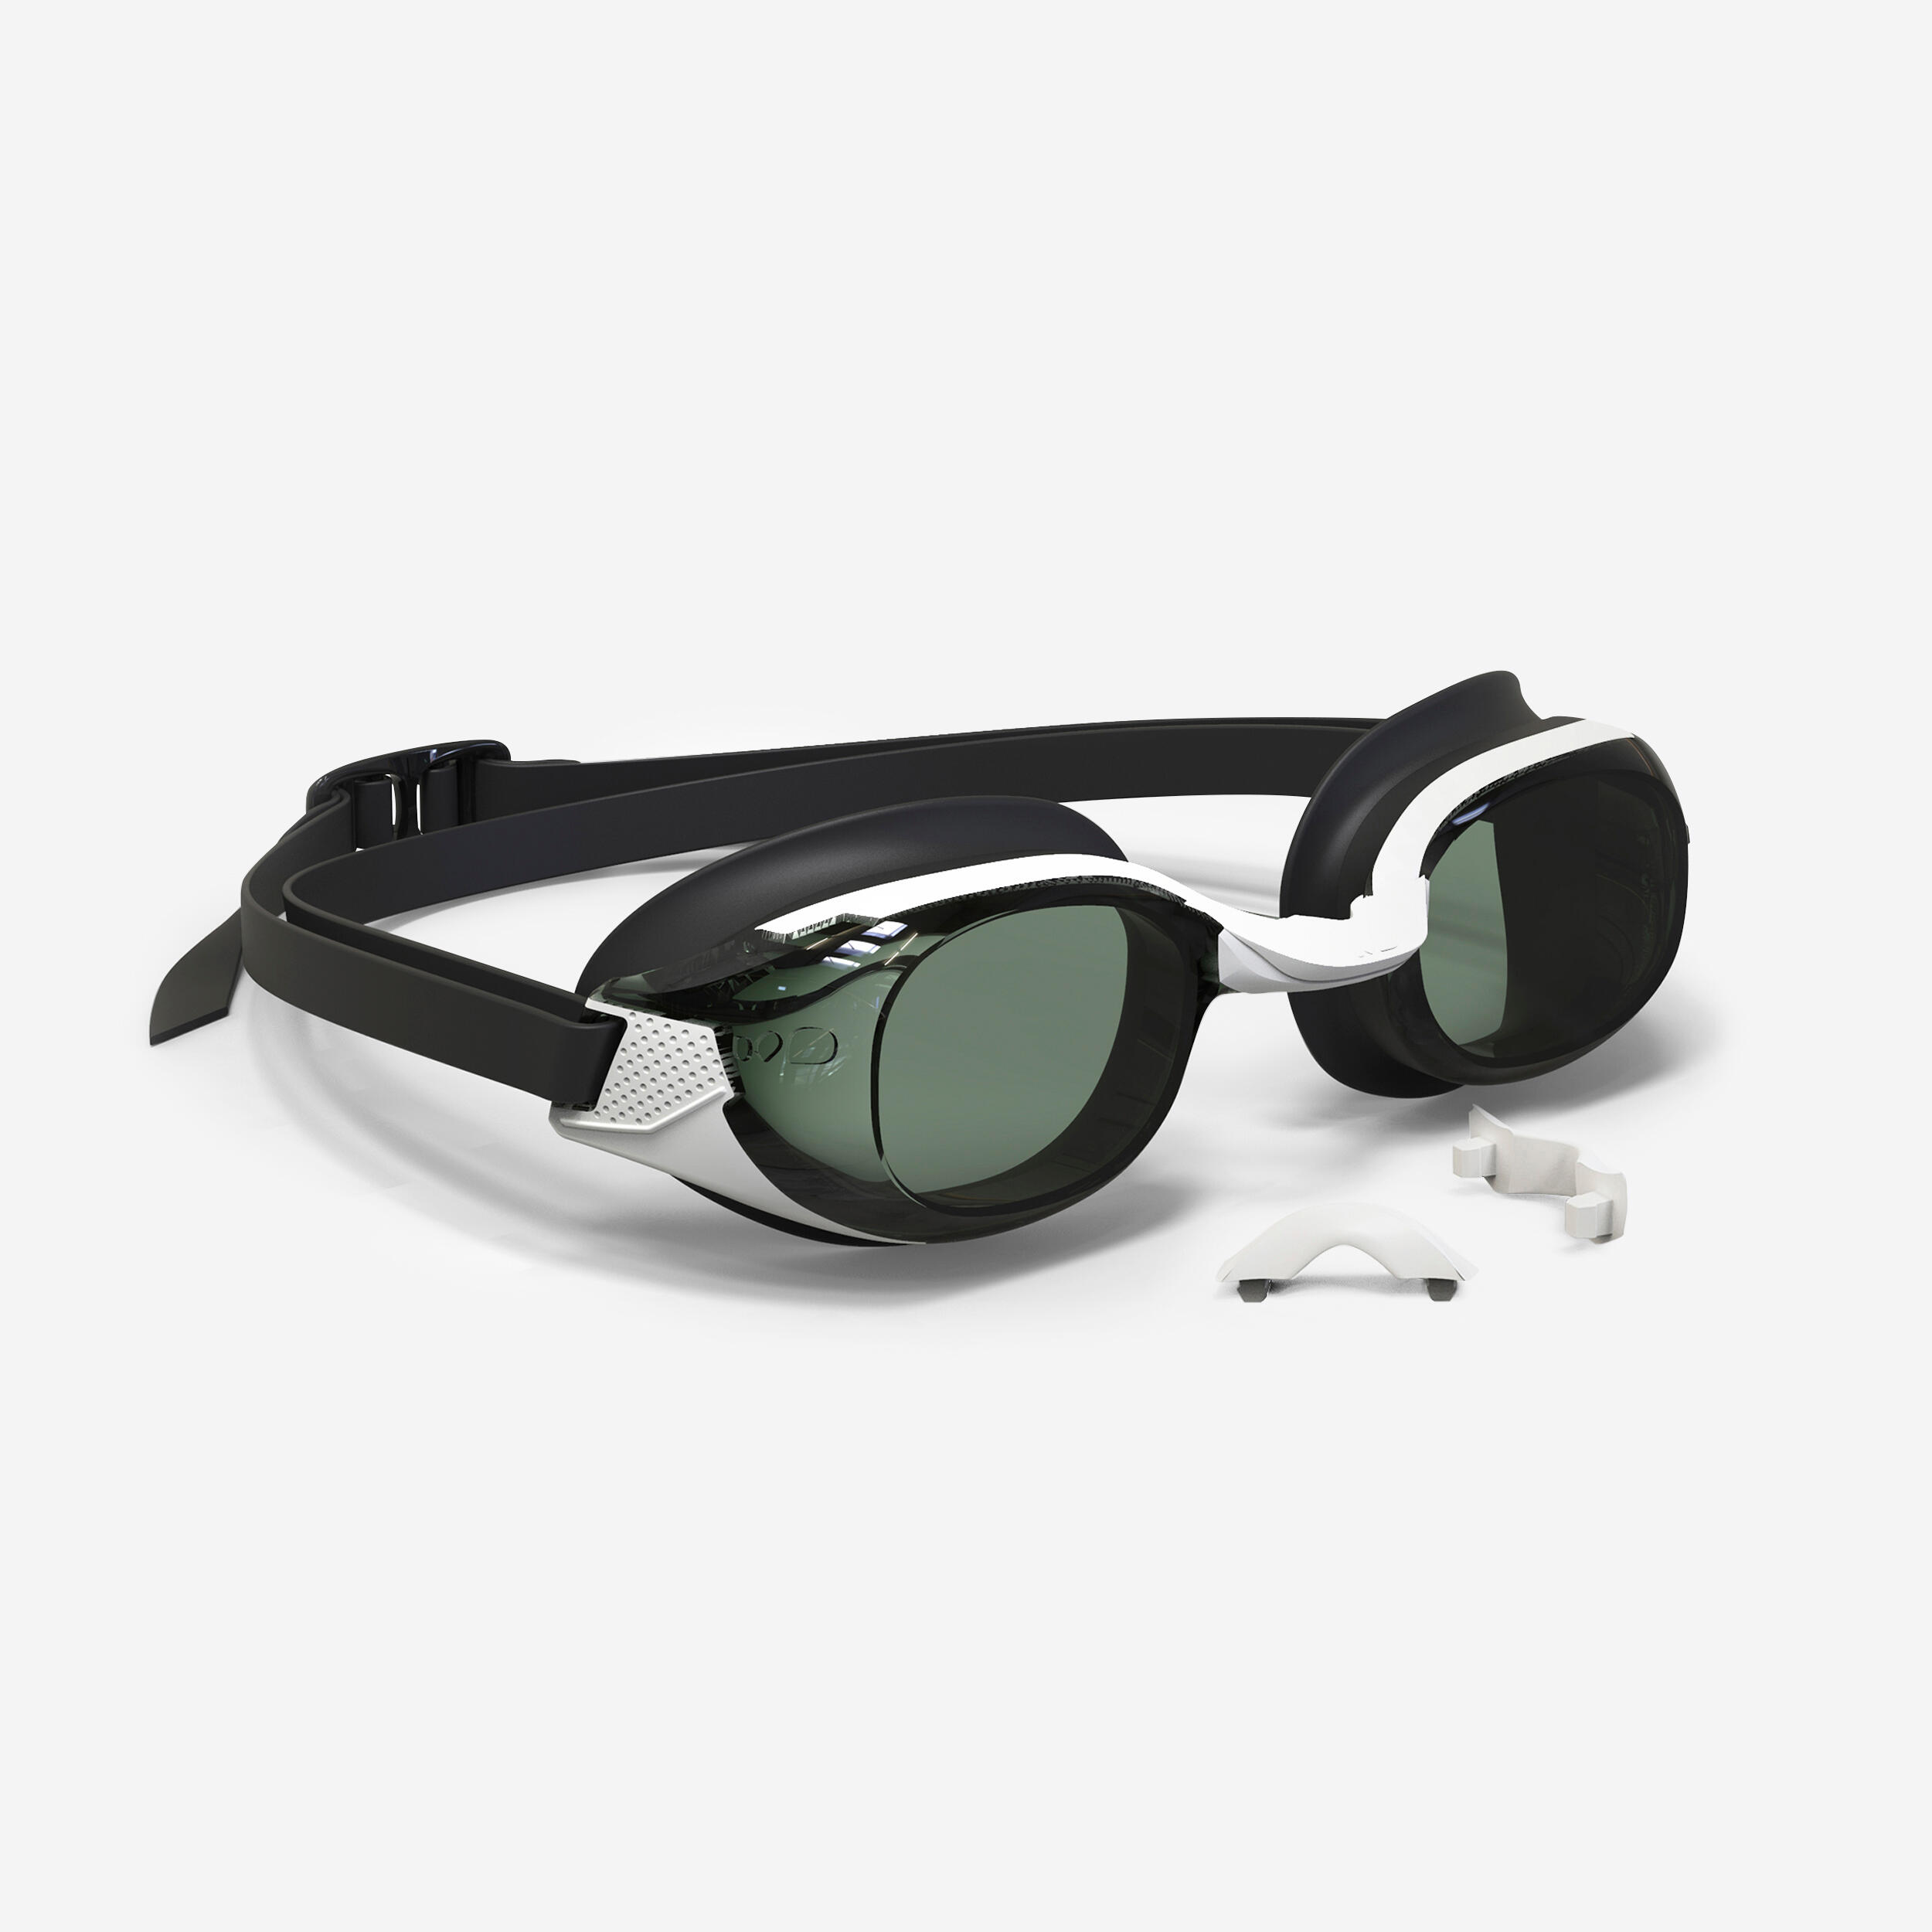 BFIT corrective swimming goggles - Smoked lenses - Single size - Black 1/6